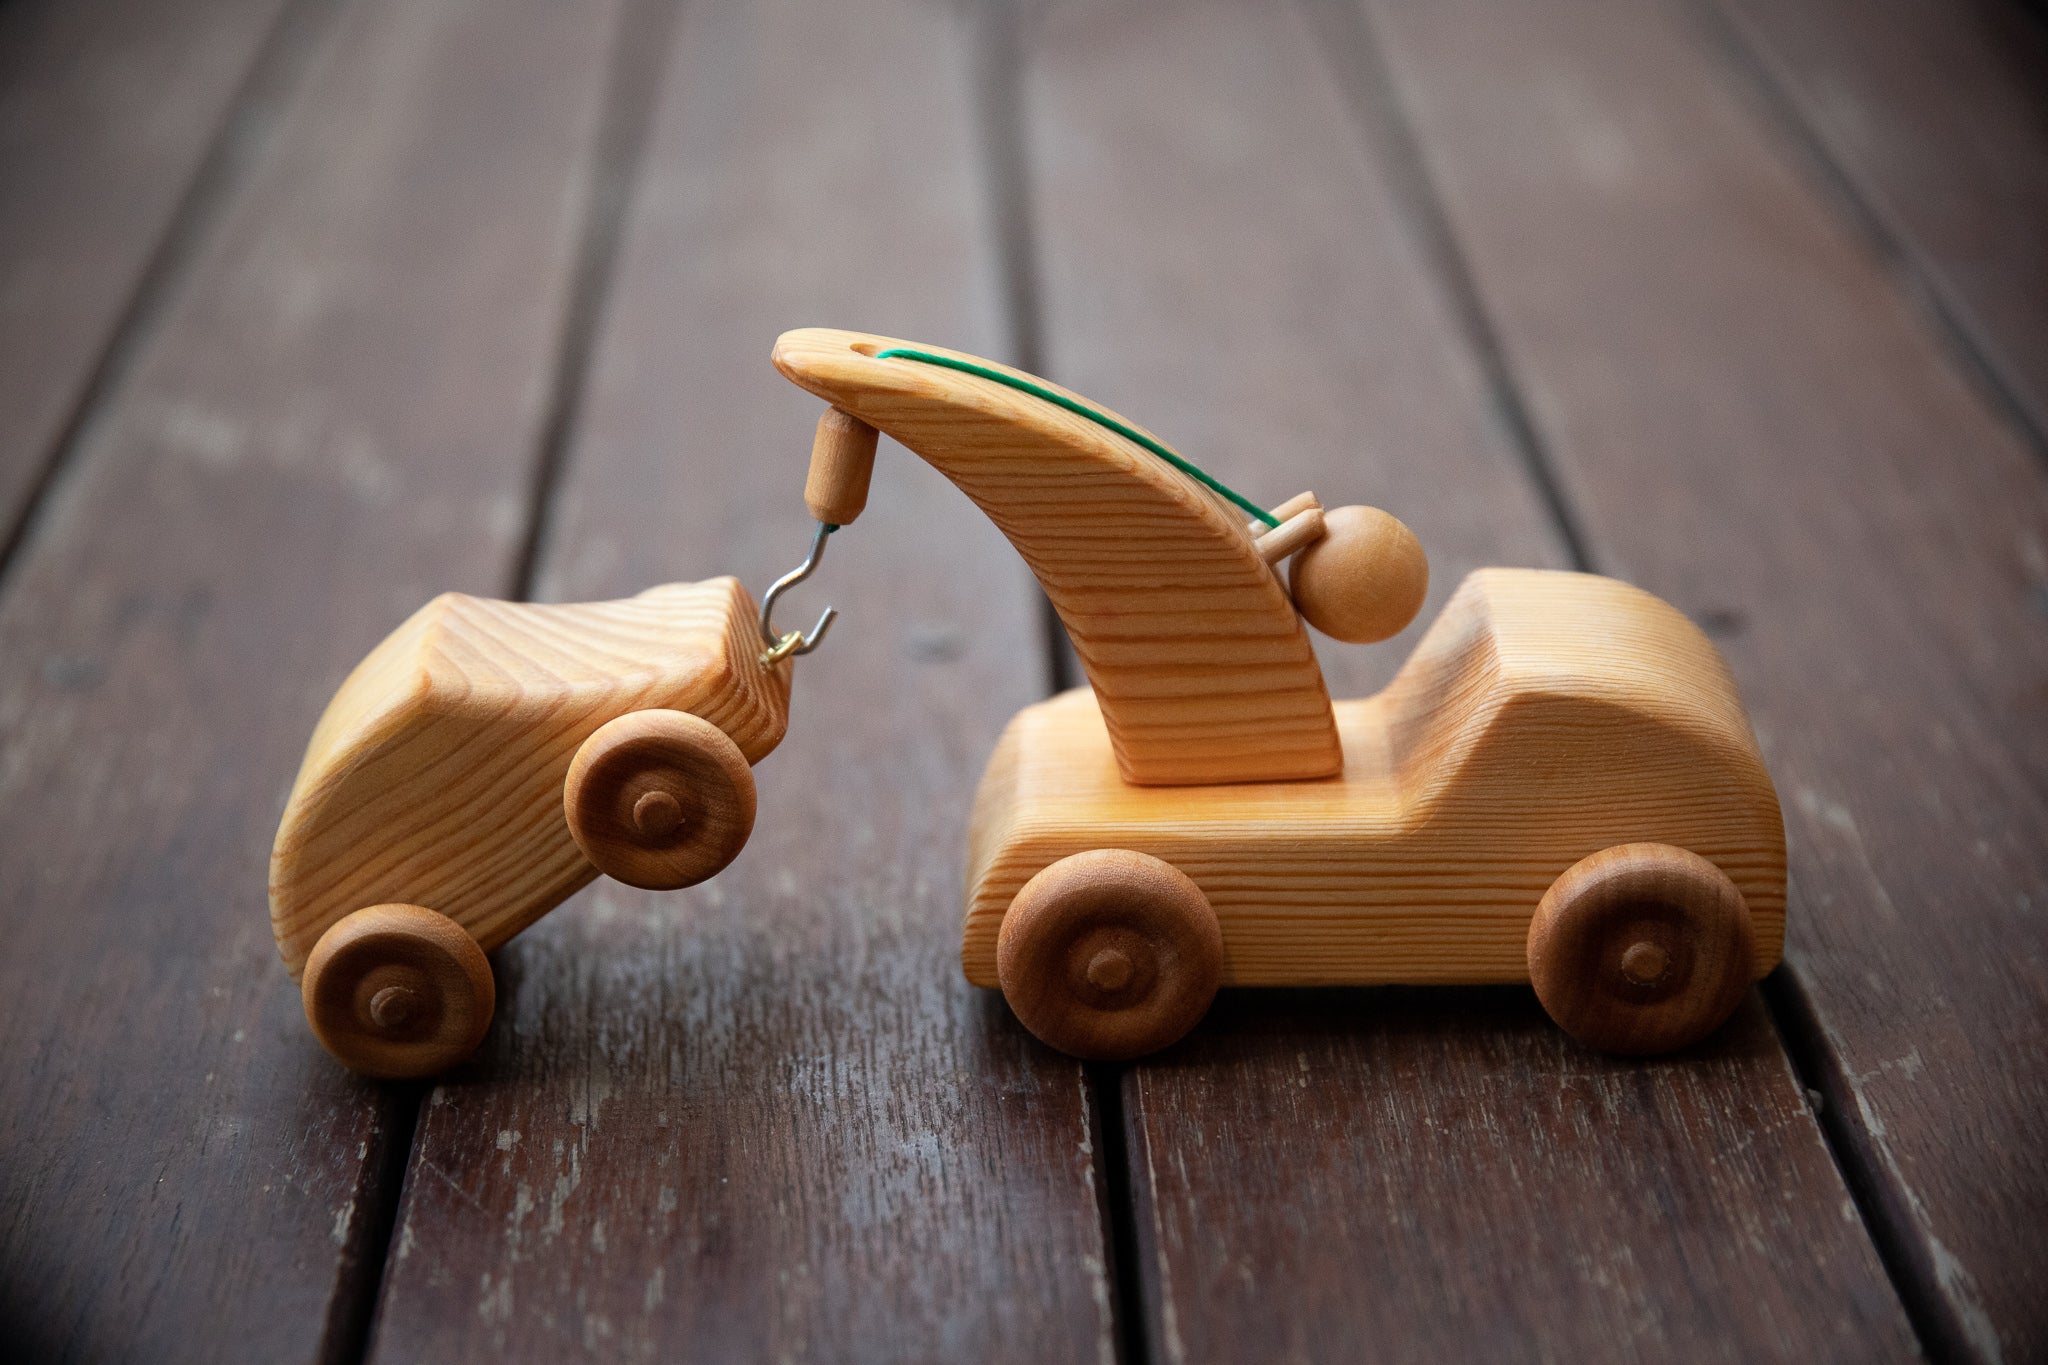 Debresk Small Wooden Crane Tow Truck with Mini Car | 20% OFF | Children of the Wild